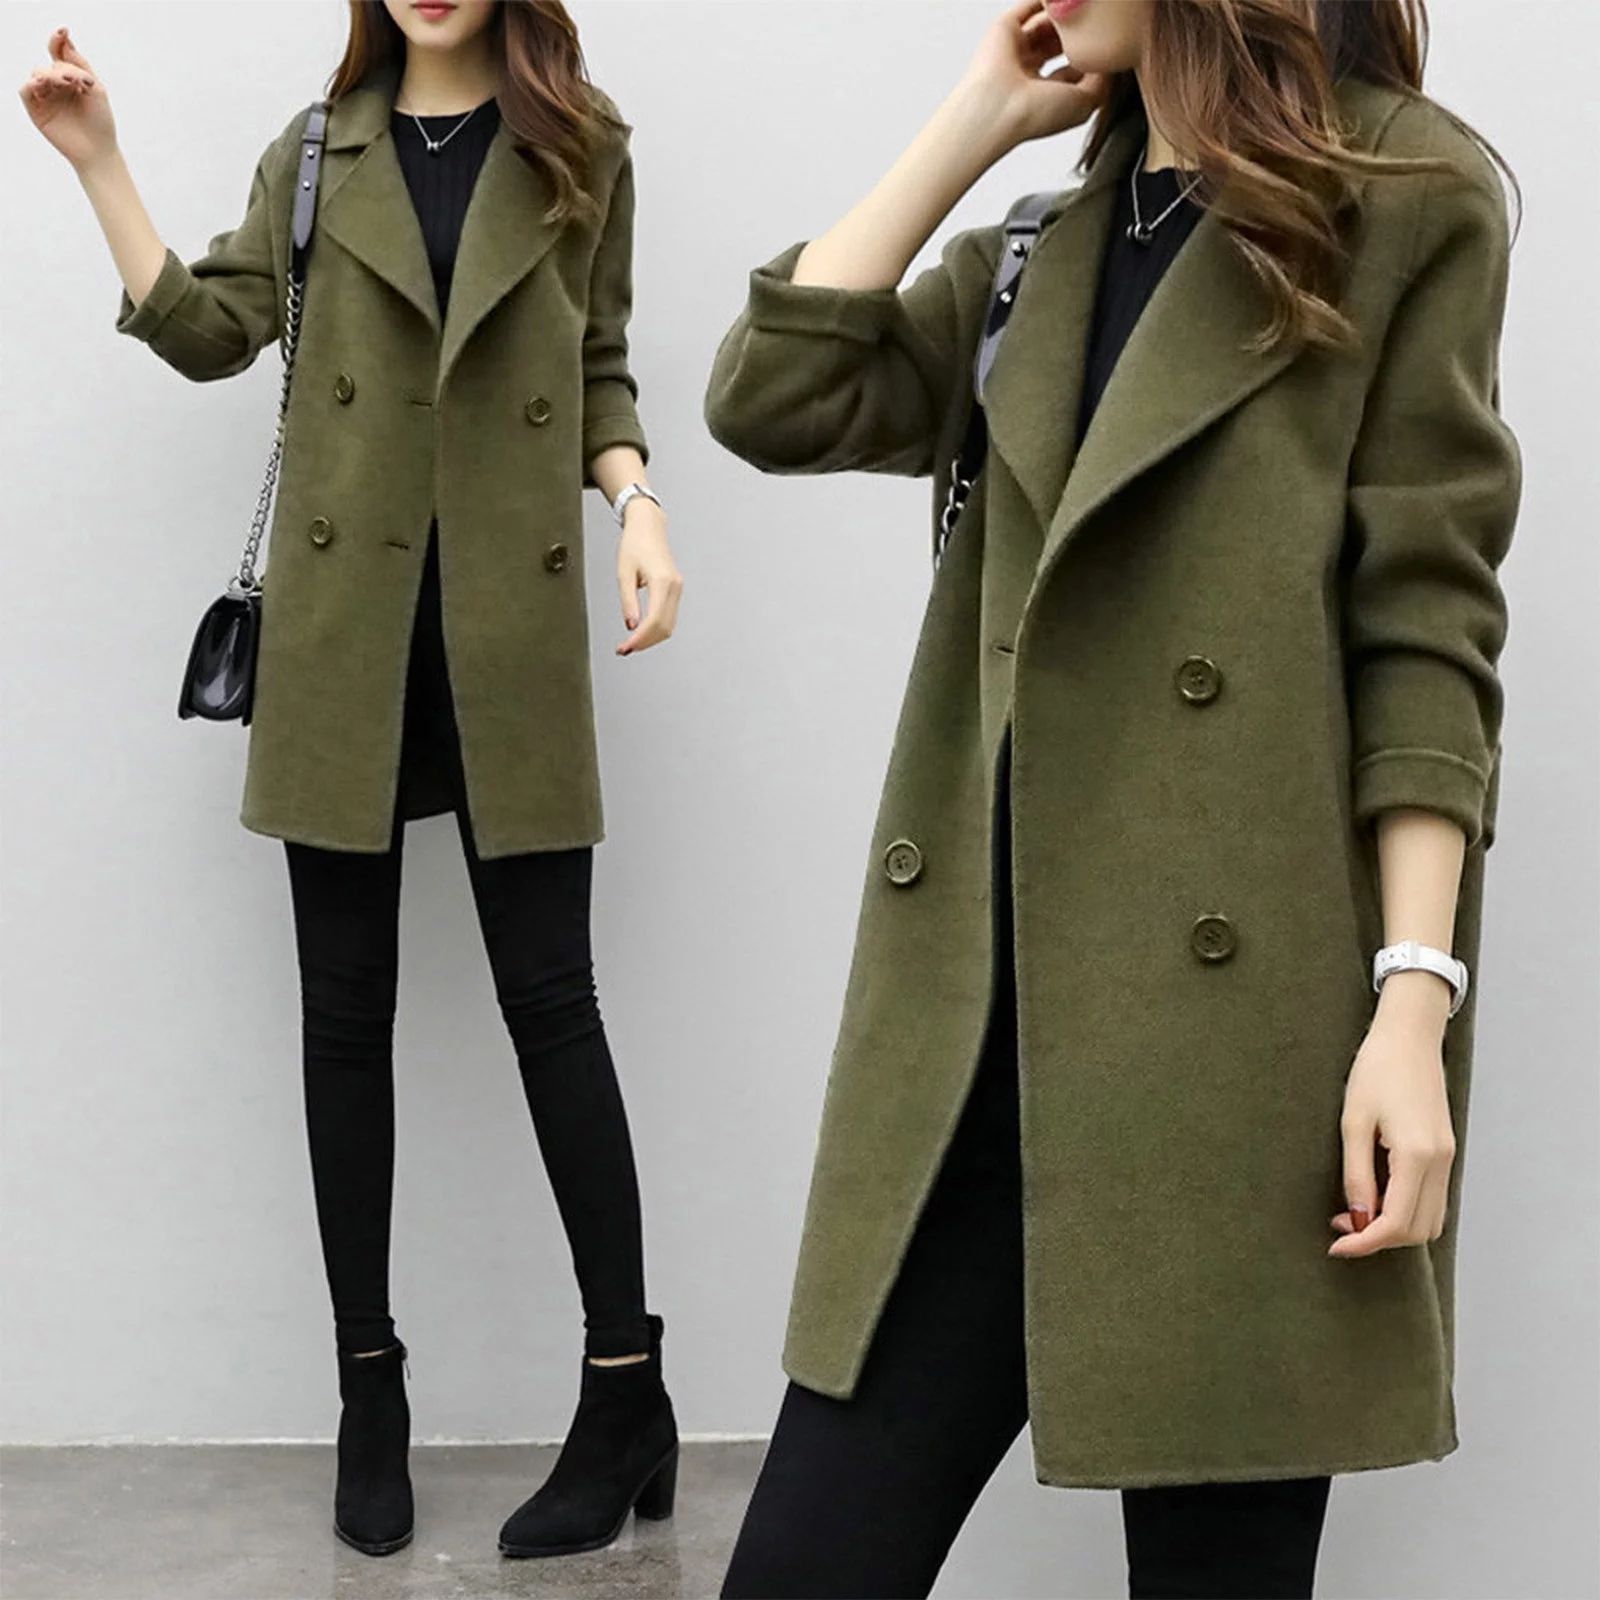 Deals 50% Off Clear! YOTAMI Women's Coats Autumn Winter Fashion Casual Jacket Casual Outwear Card... | Walmart (US)